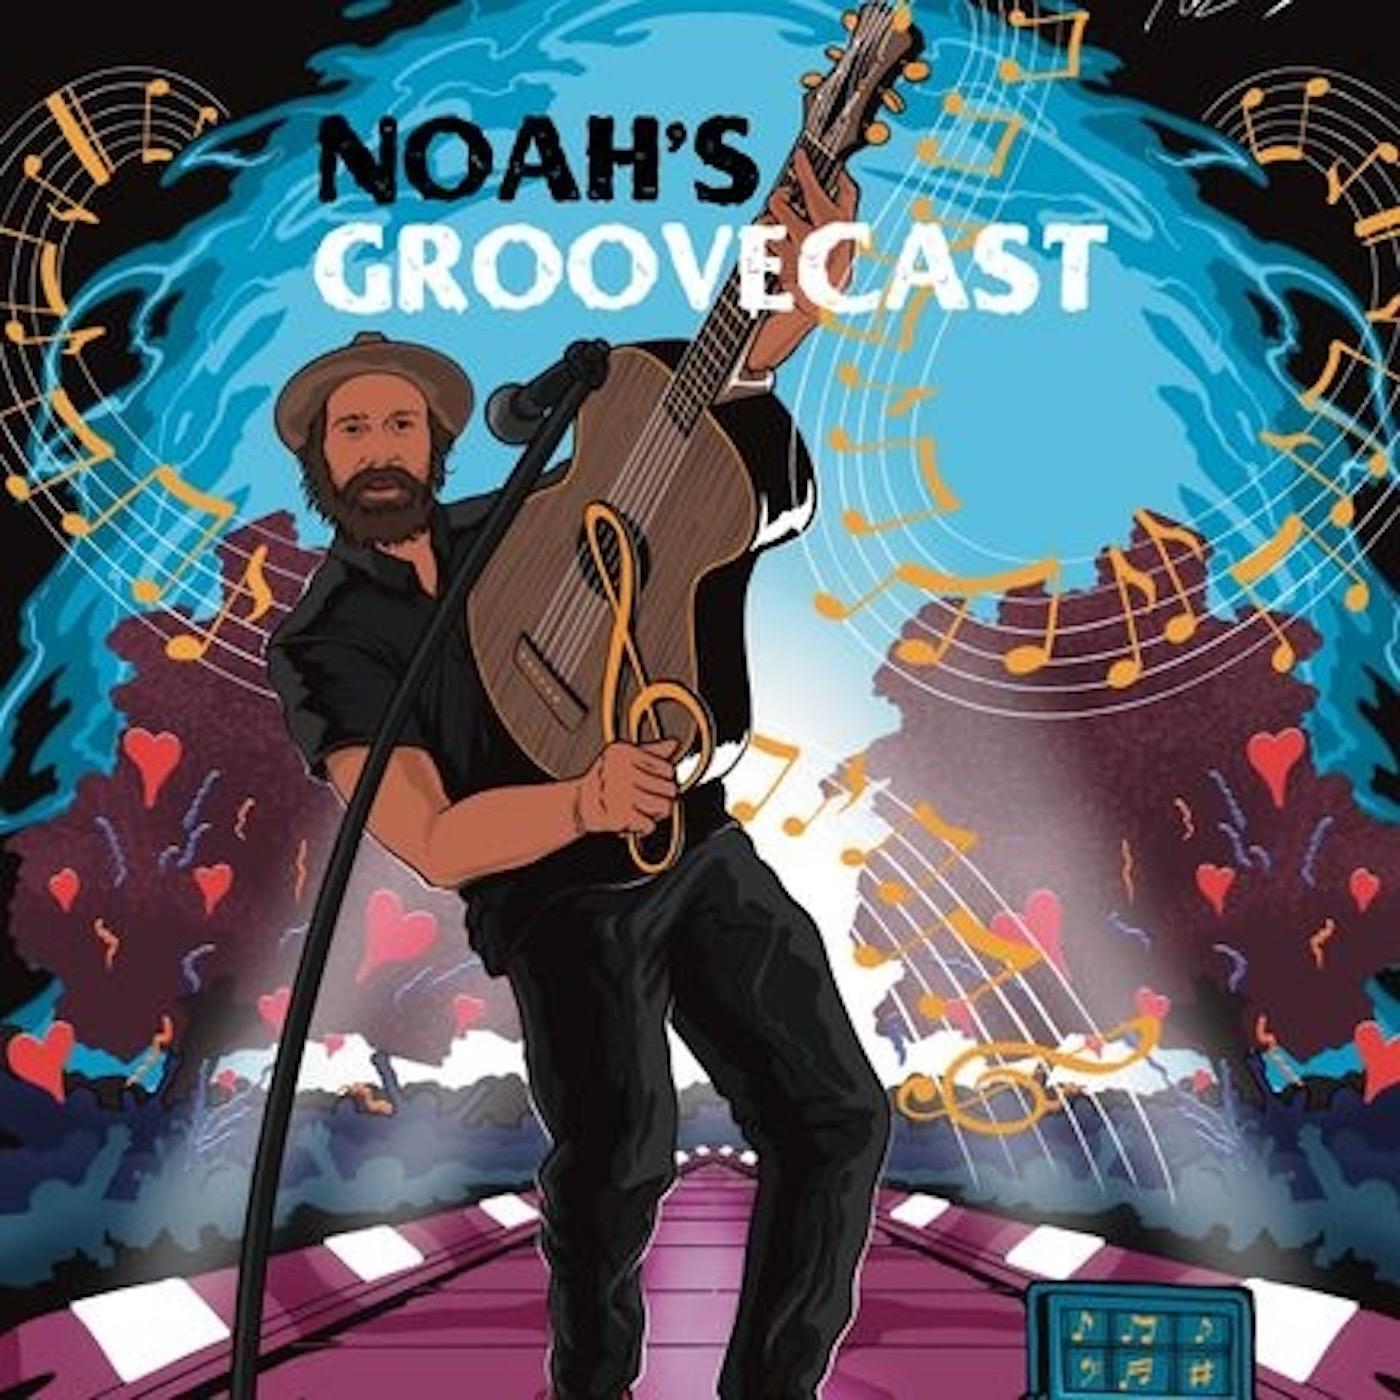 Noah's Groovecast